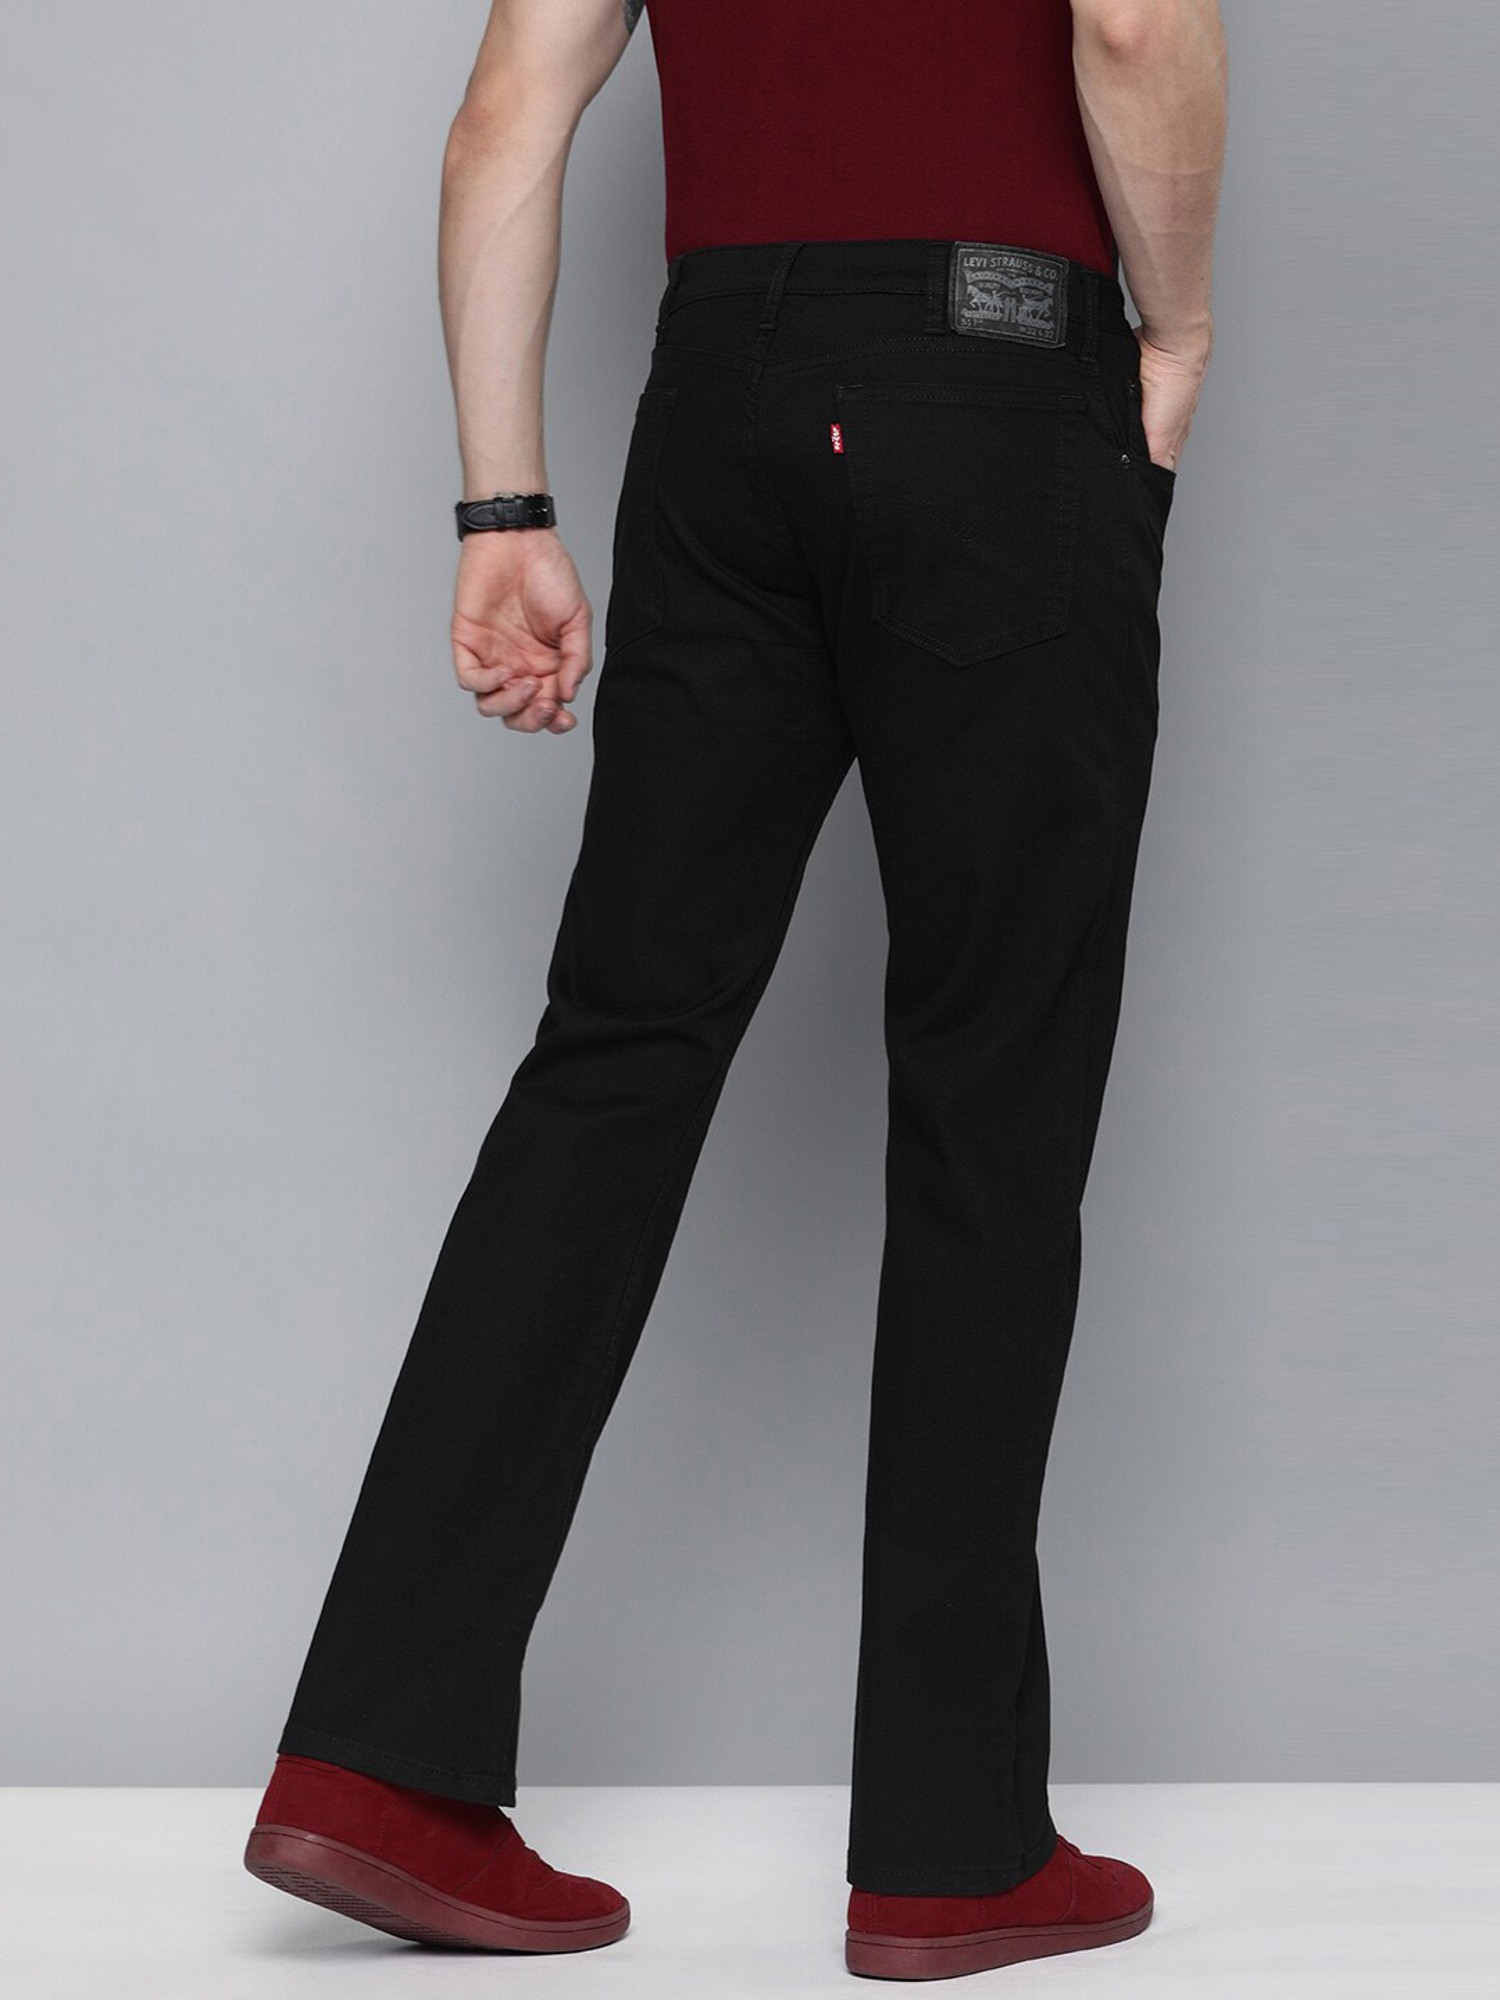 Buy Levis Black Cotton Bootcut Jeans for Mens Online @ Tata CLiQ